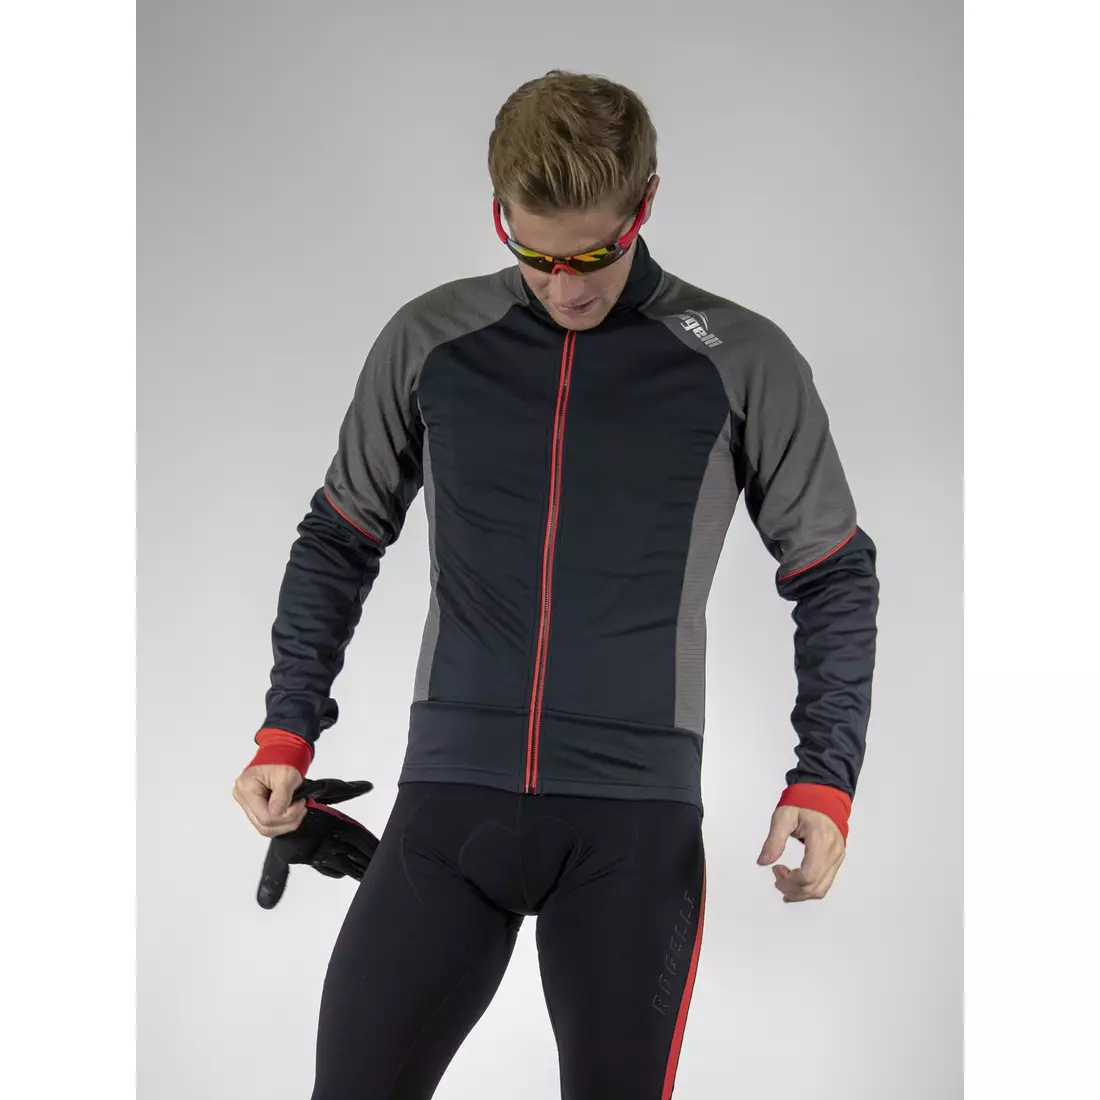 ROGELLI TRANI 4.0 zimná softshellová cyklistická bunda čierno-šedo-červená